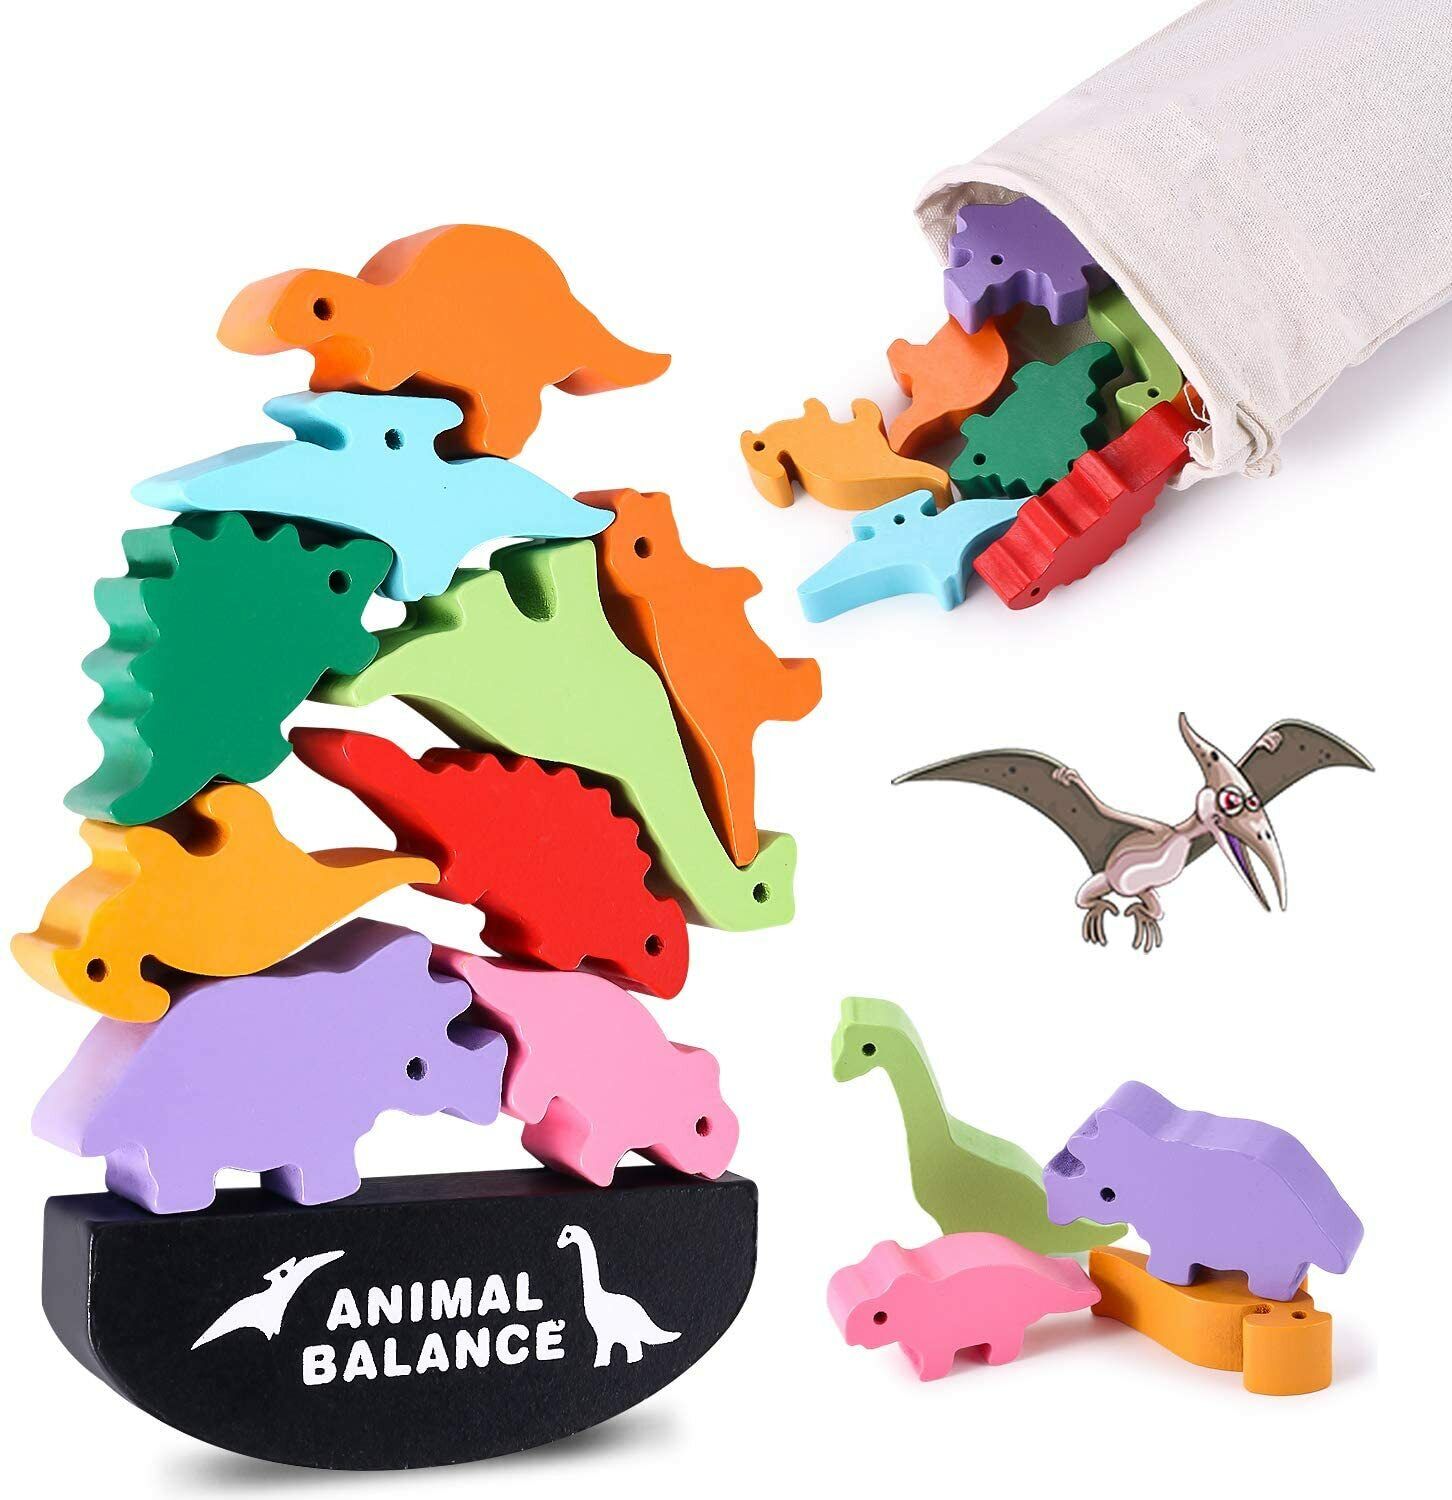 Kids Dinosaur Toys for Age 3 4 5 6 7 8 9yr Year Old Boys Girls, Educational Toy